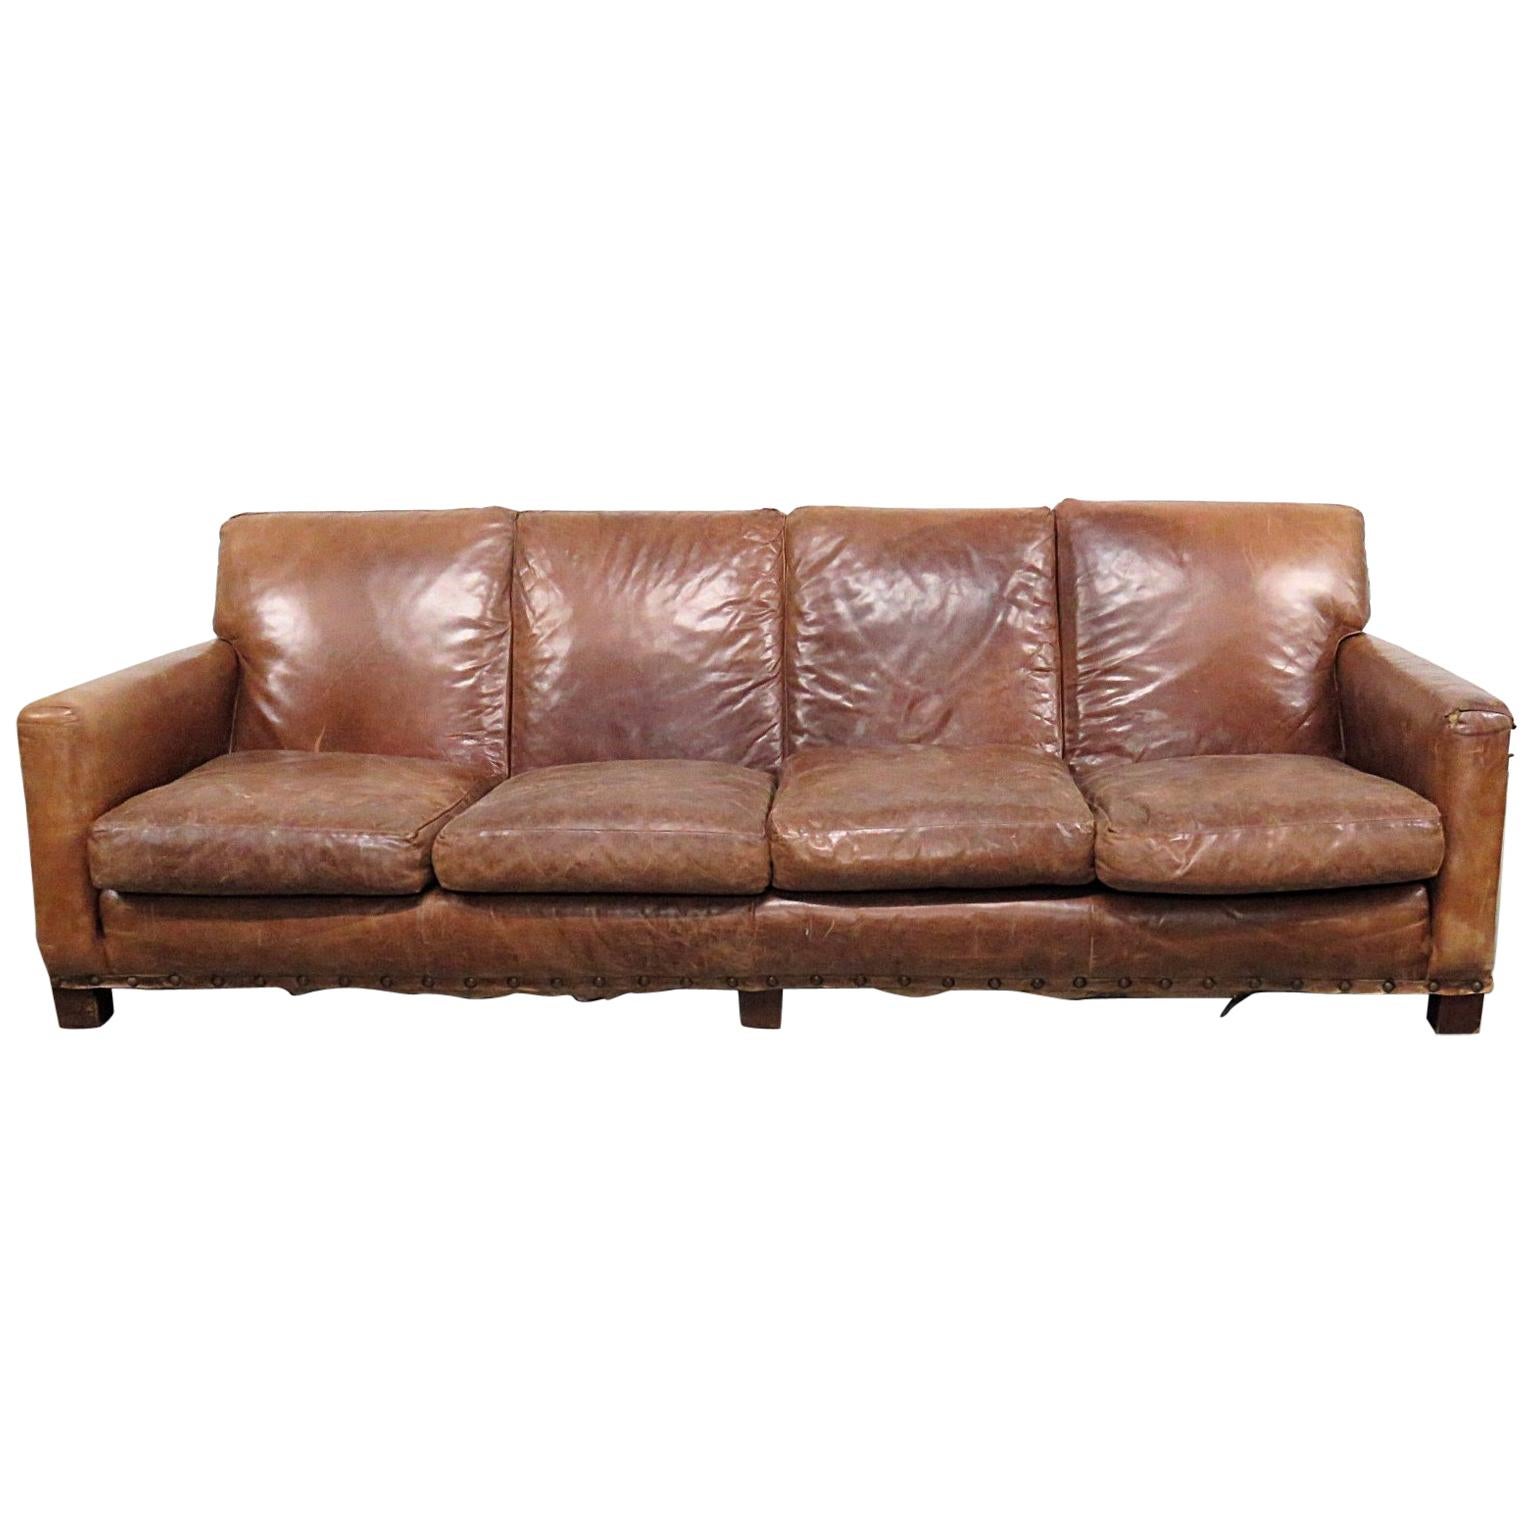 Vintage Mid-Century Modern Ralph Lauren Sofa